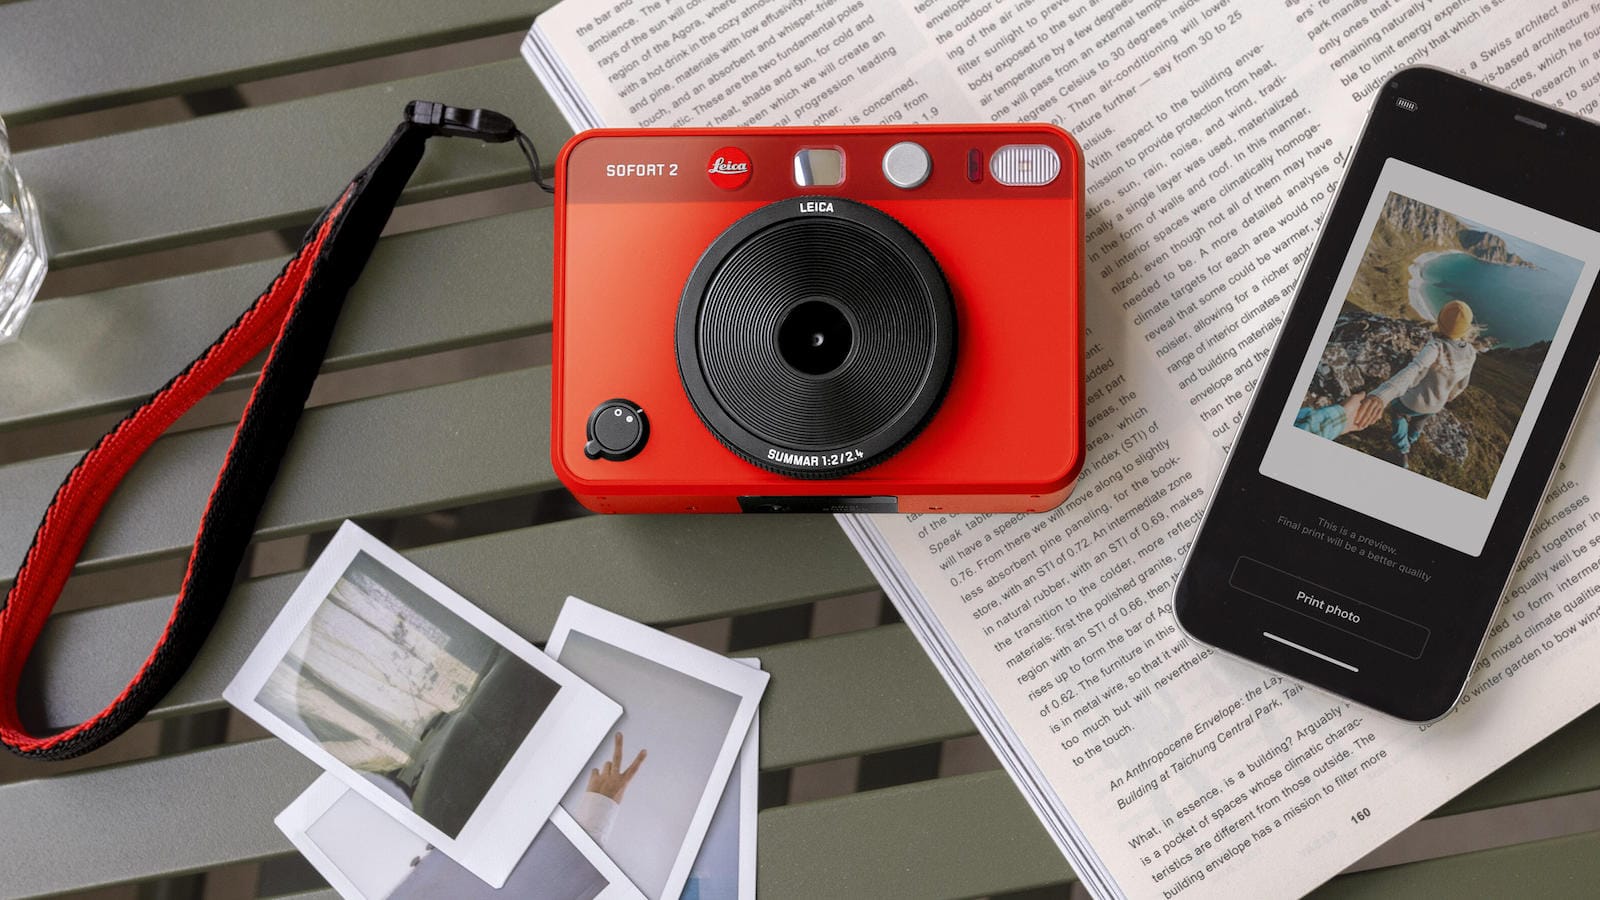 Leica SOFORT 2 combines digital and analog tech